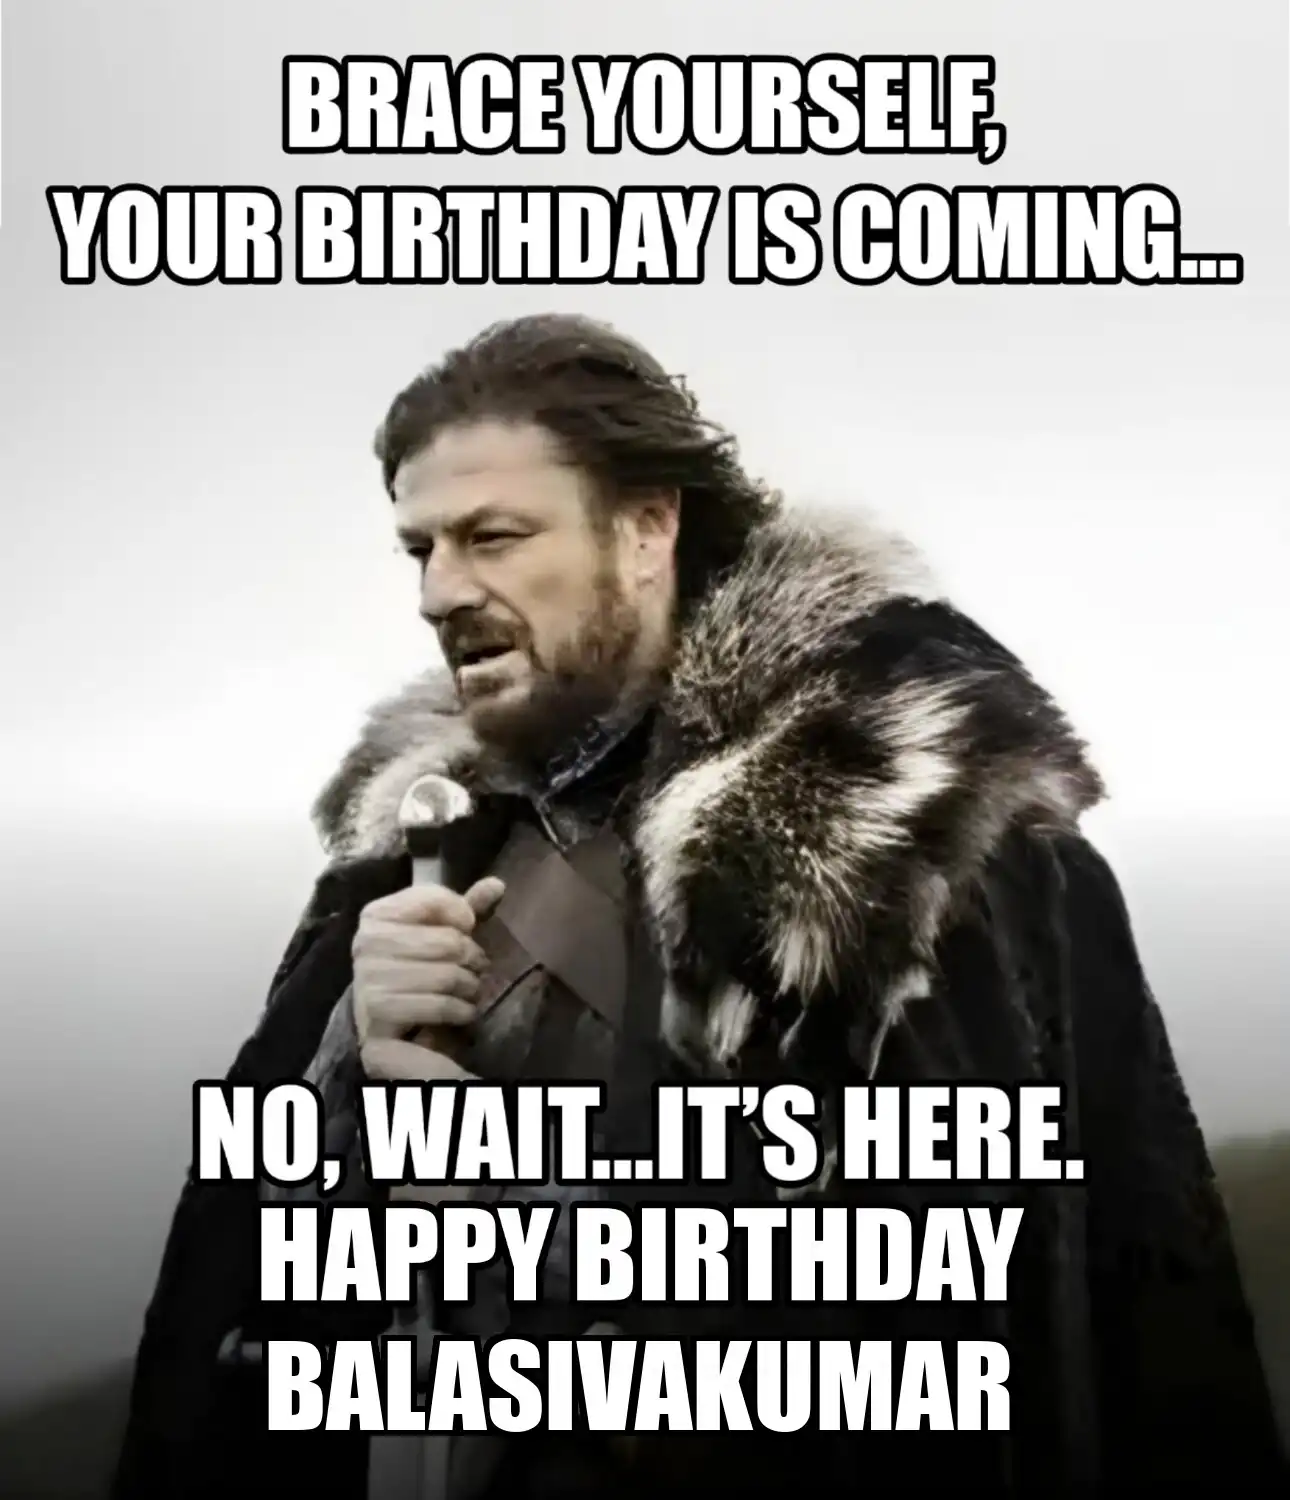 Happy Birthday Balasivakumar Brace Yourself Your Birthday Is Coming Meme